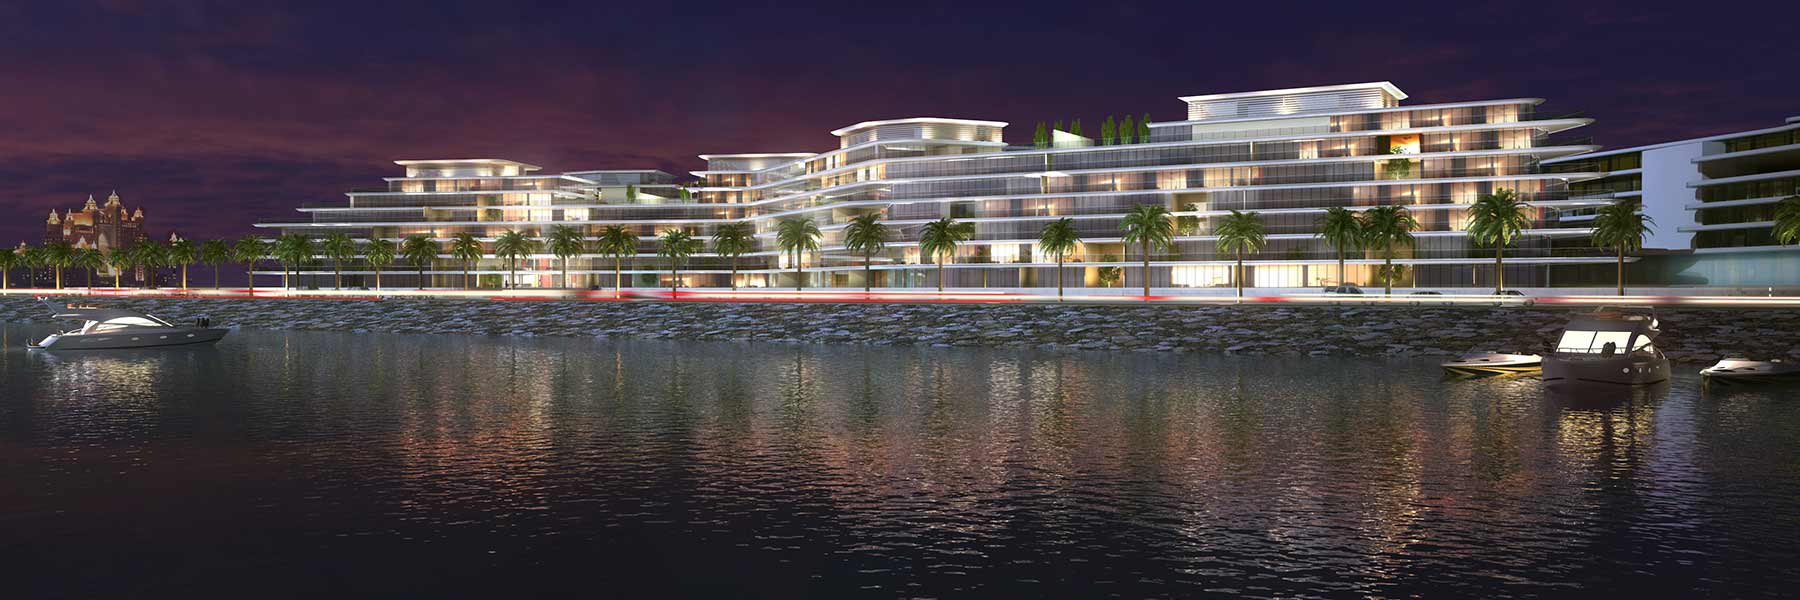 RMJM’s W Hotel Dubai – The Palm, Opens to the Public